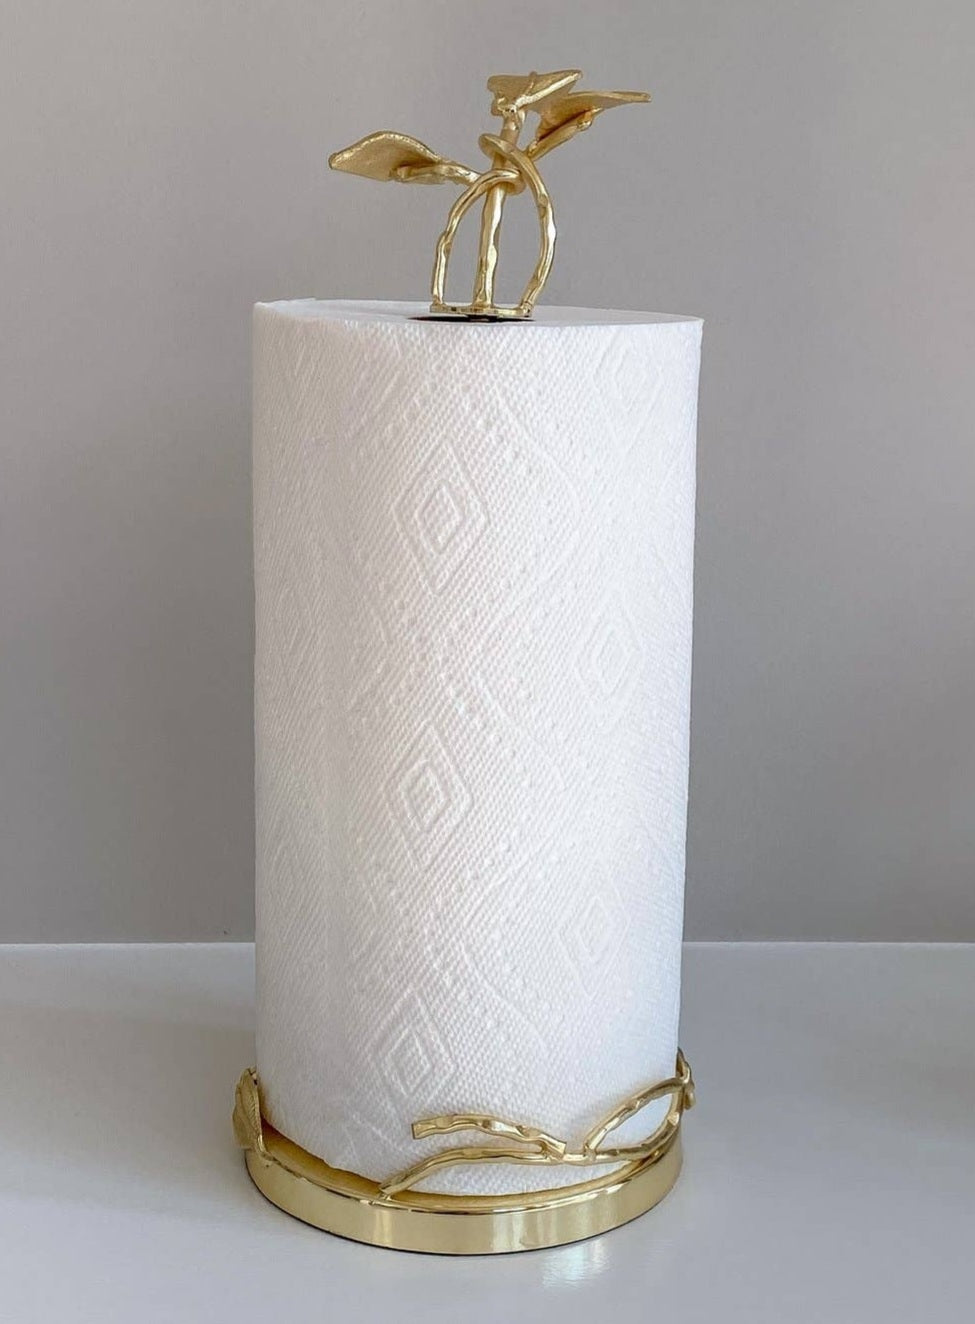 Gold Paper Towel Holder w/Leaf Design - Exquisite Designs Home Décor 